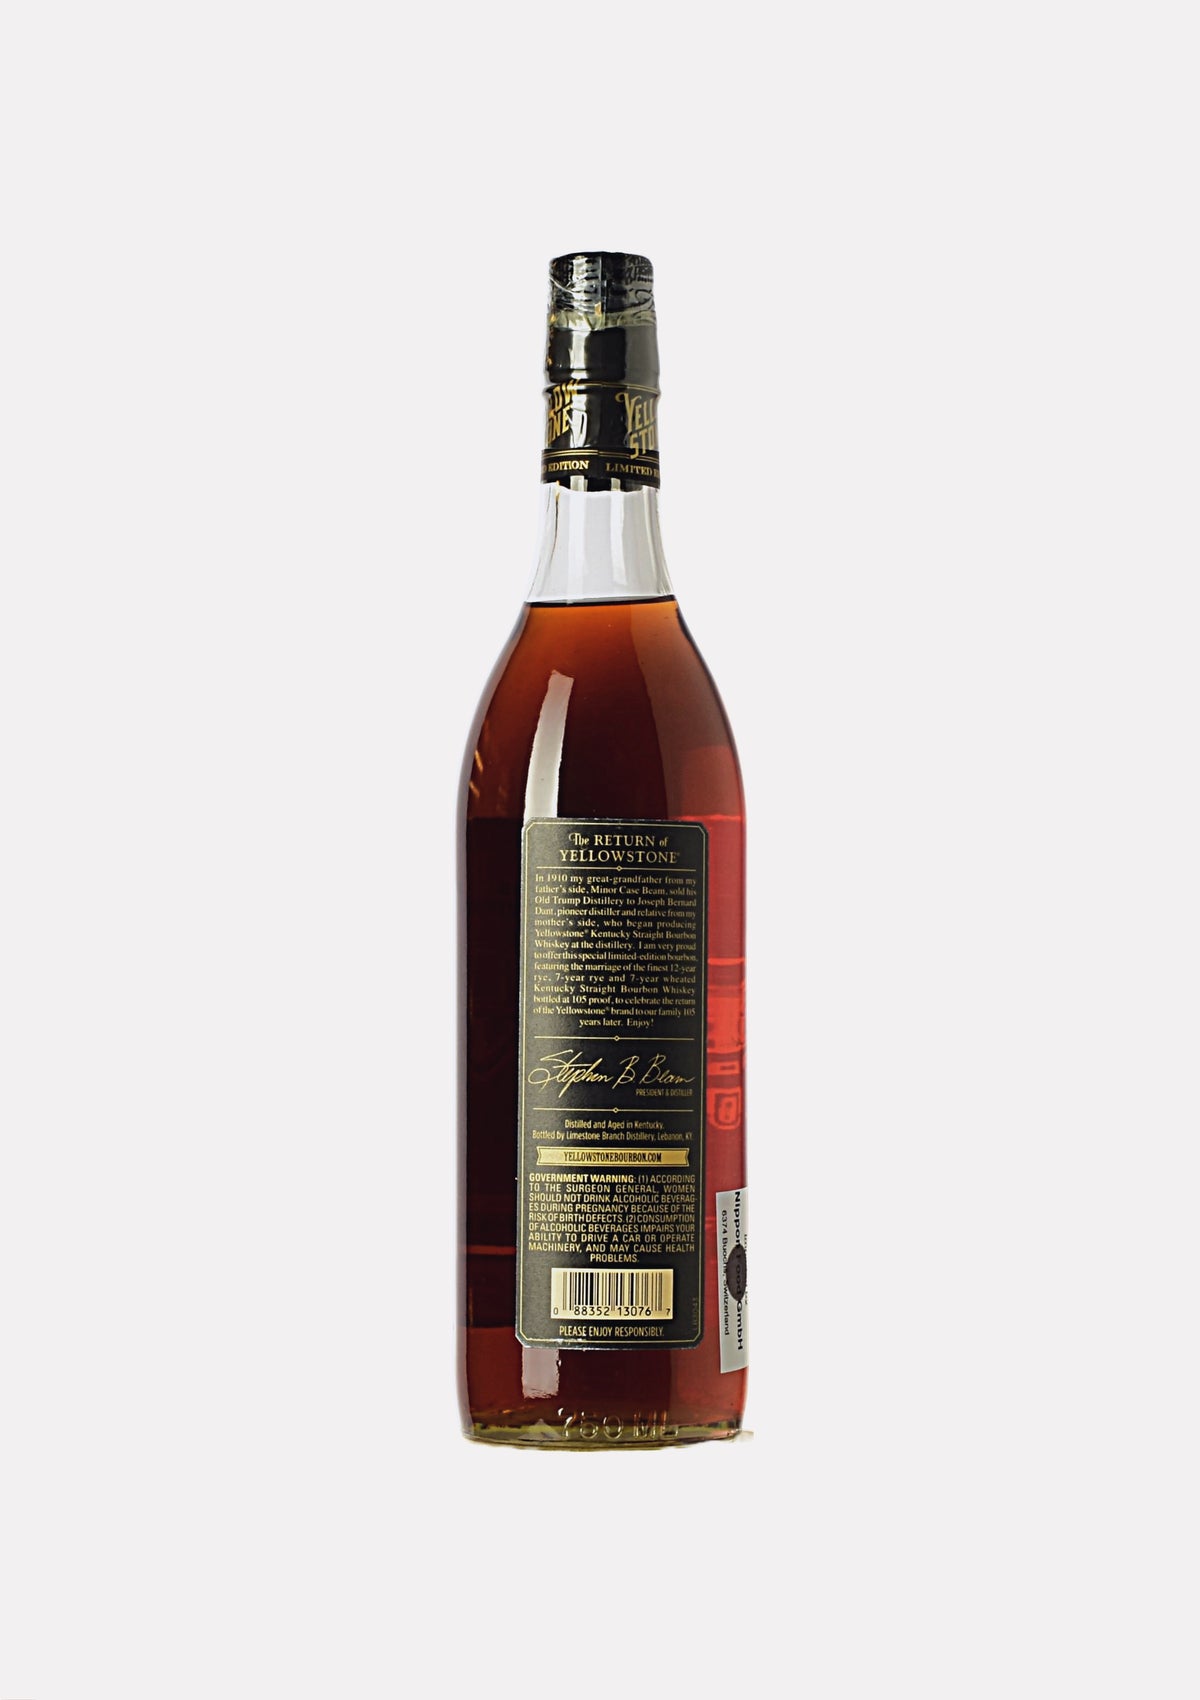 Yellostone Limited Edition 2015 Kentucky Straight Bourbon Whiskey 7 Jahre